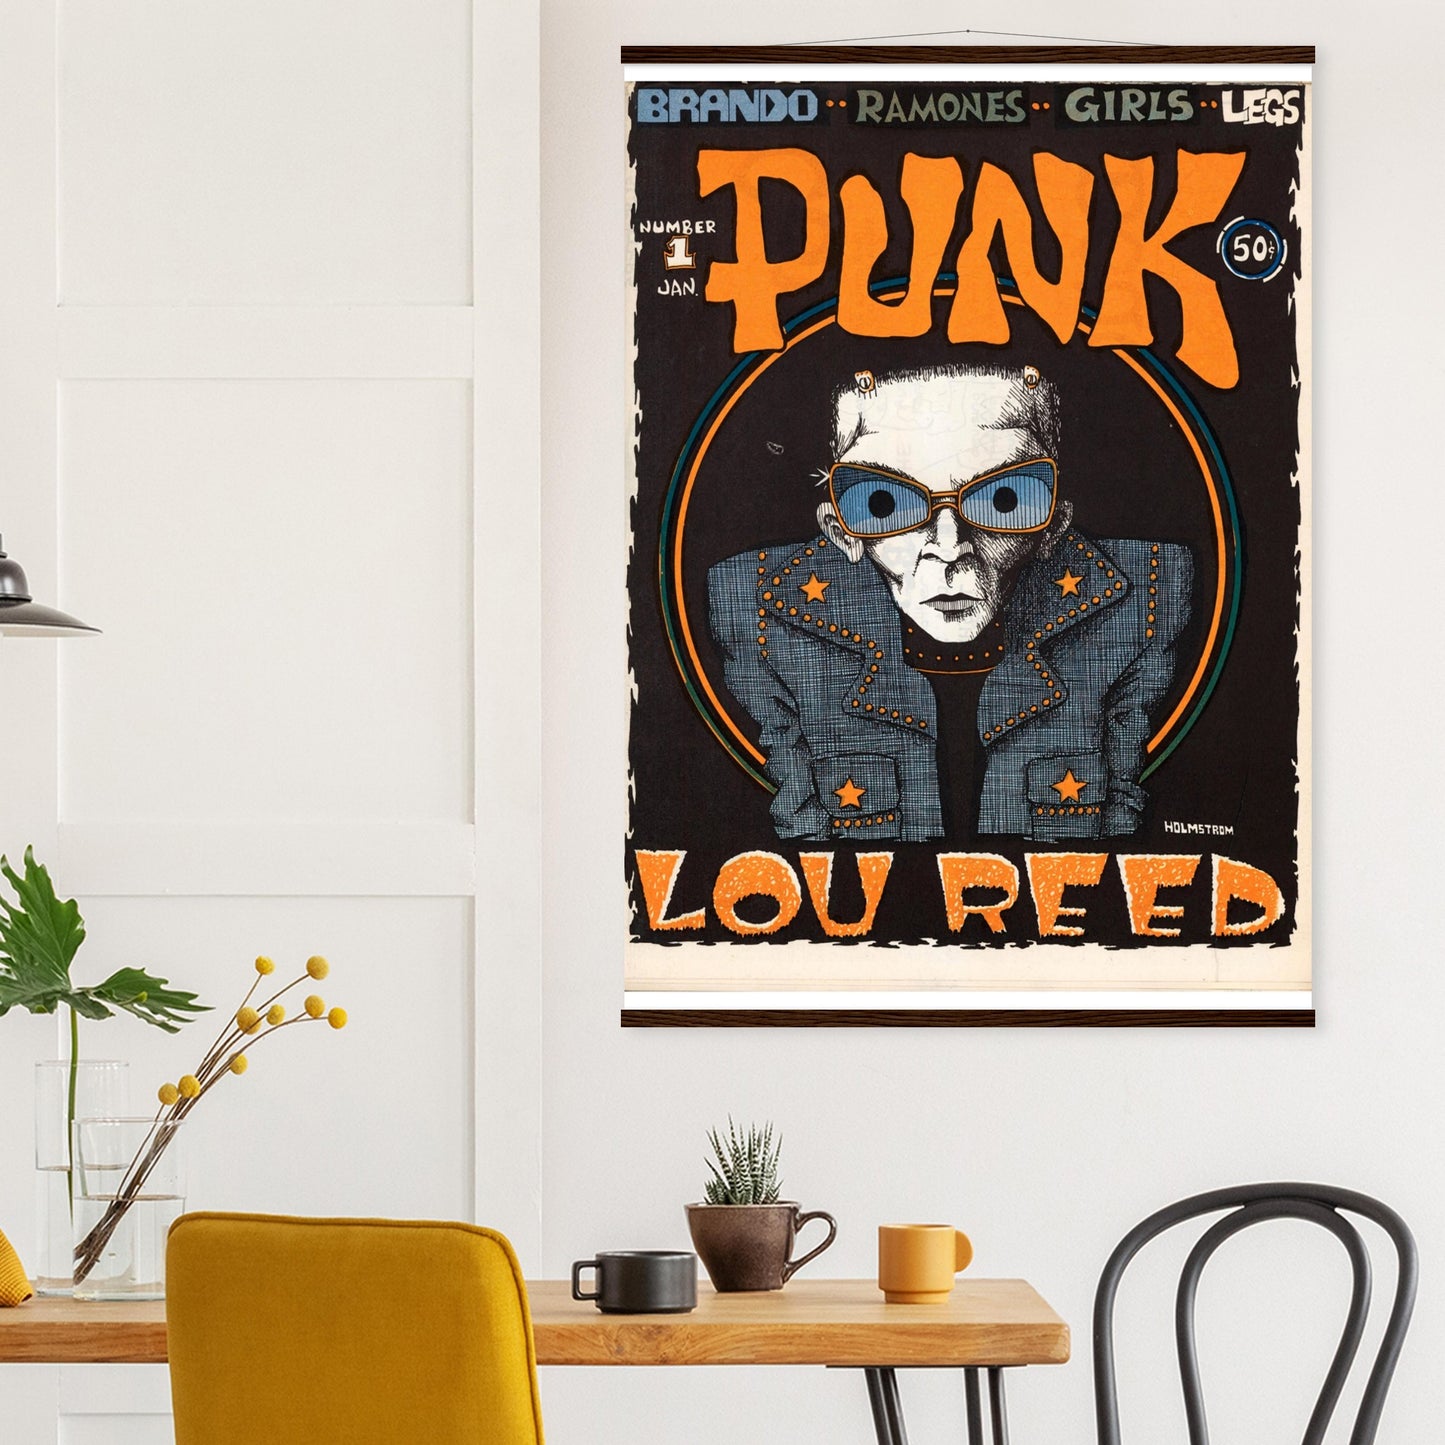 Lou Reed Punk Vintage Poster reprint on Premium Poster Matte Paper - Posterify